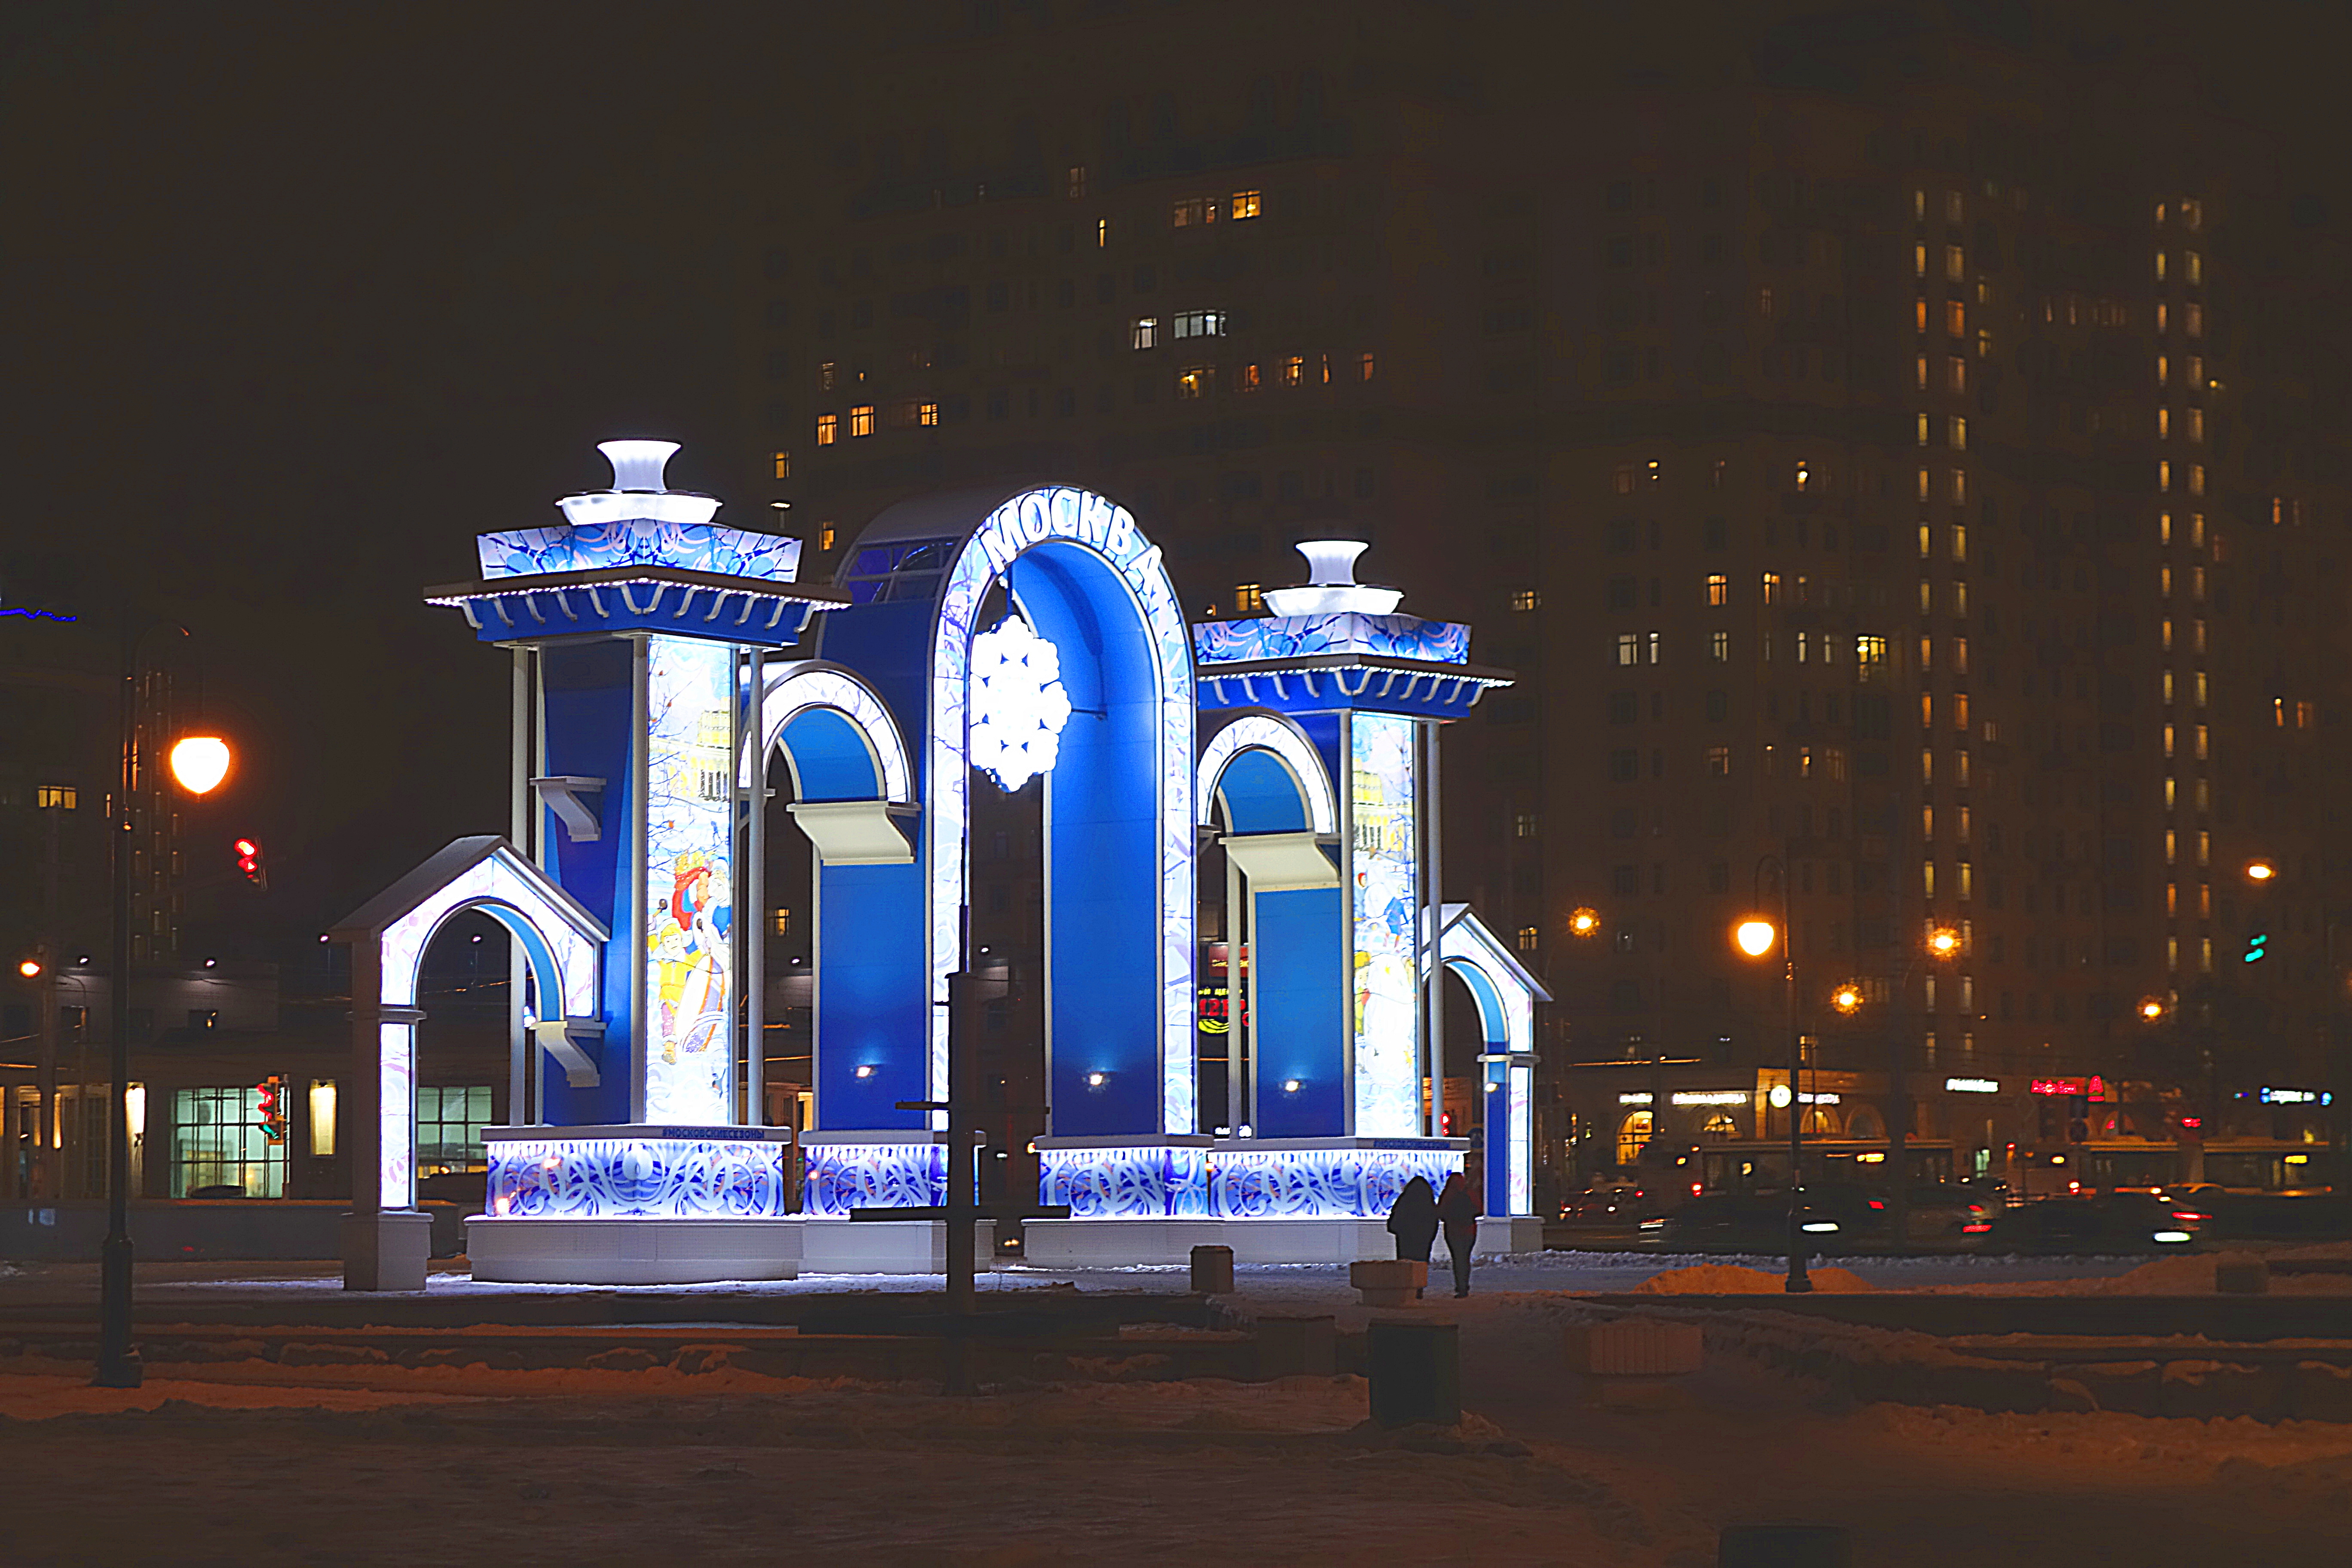 Светящиеся ворота на входе на территорию цирка. Фото Морошкина В.В.